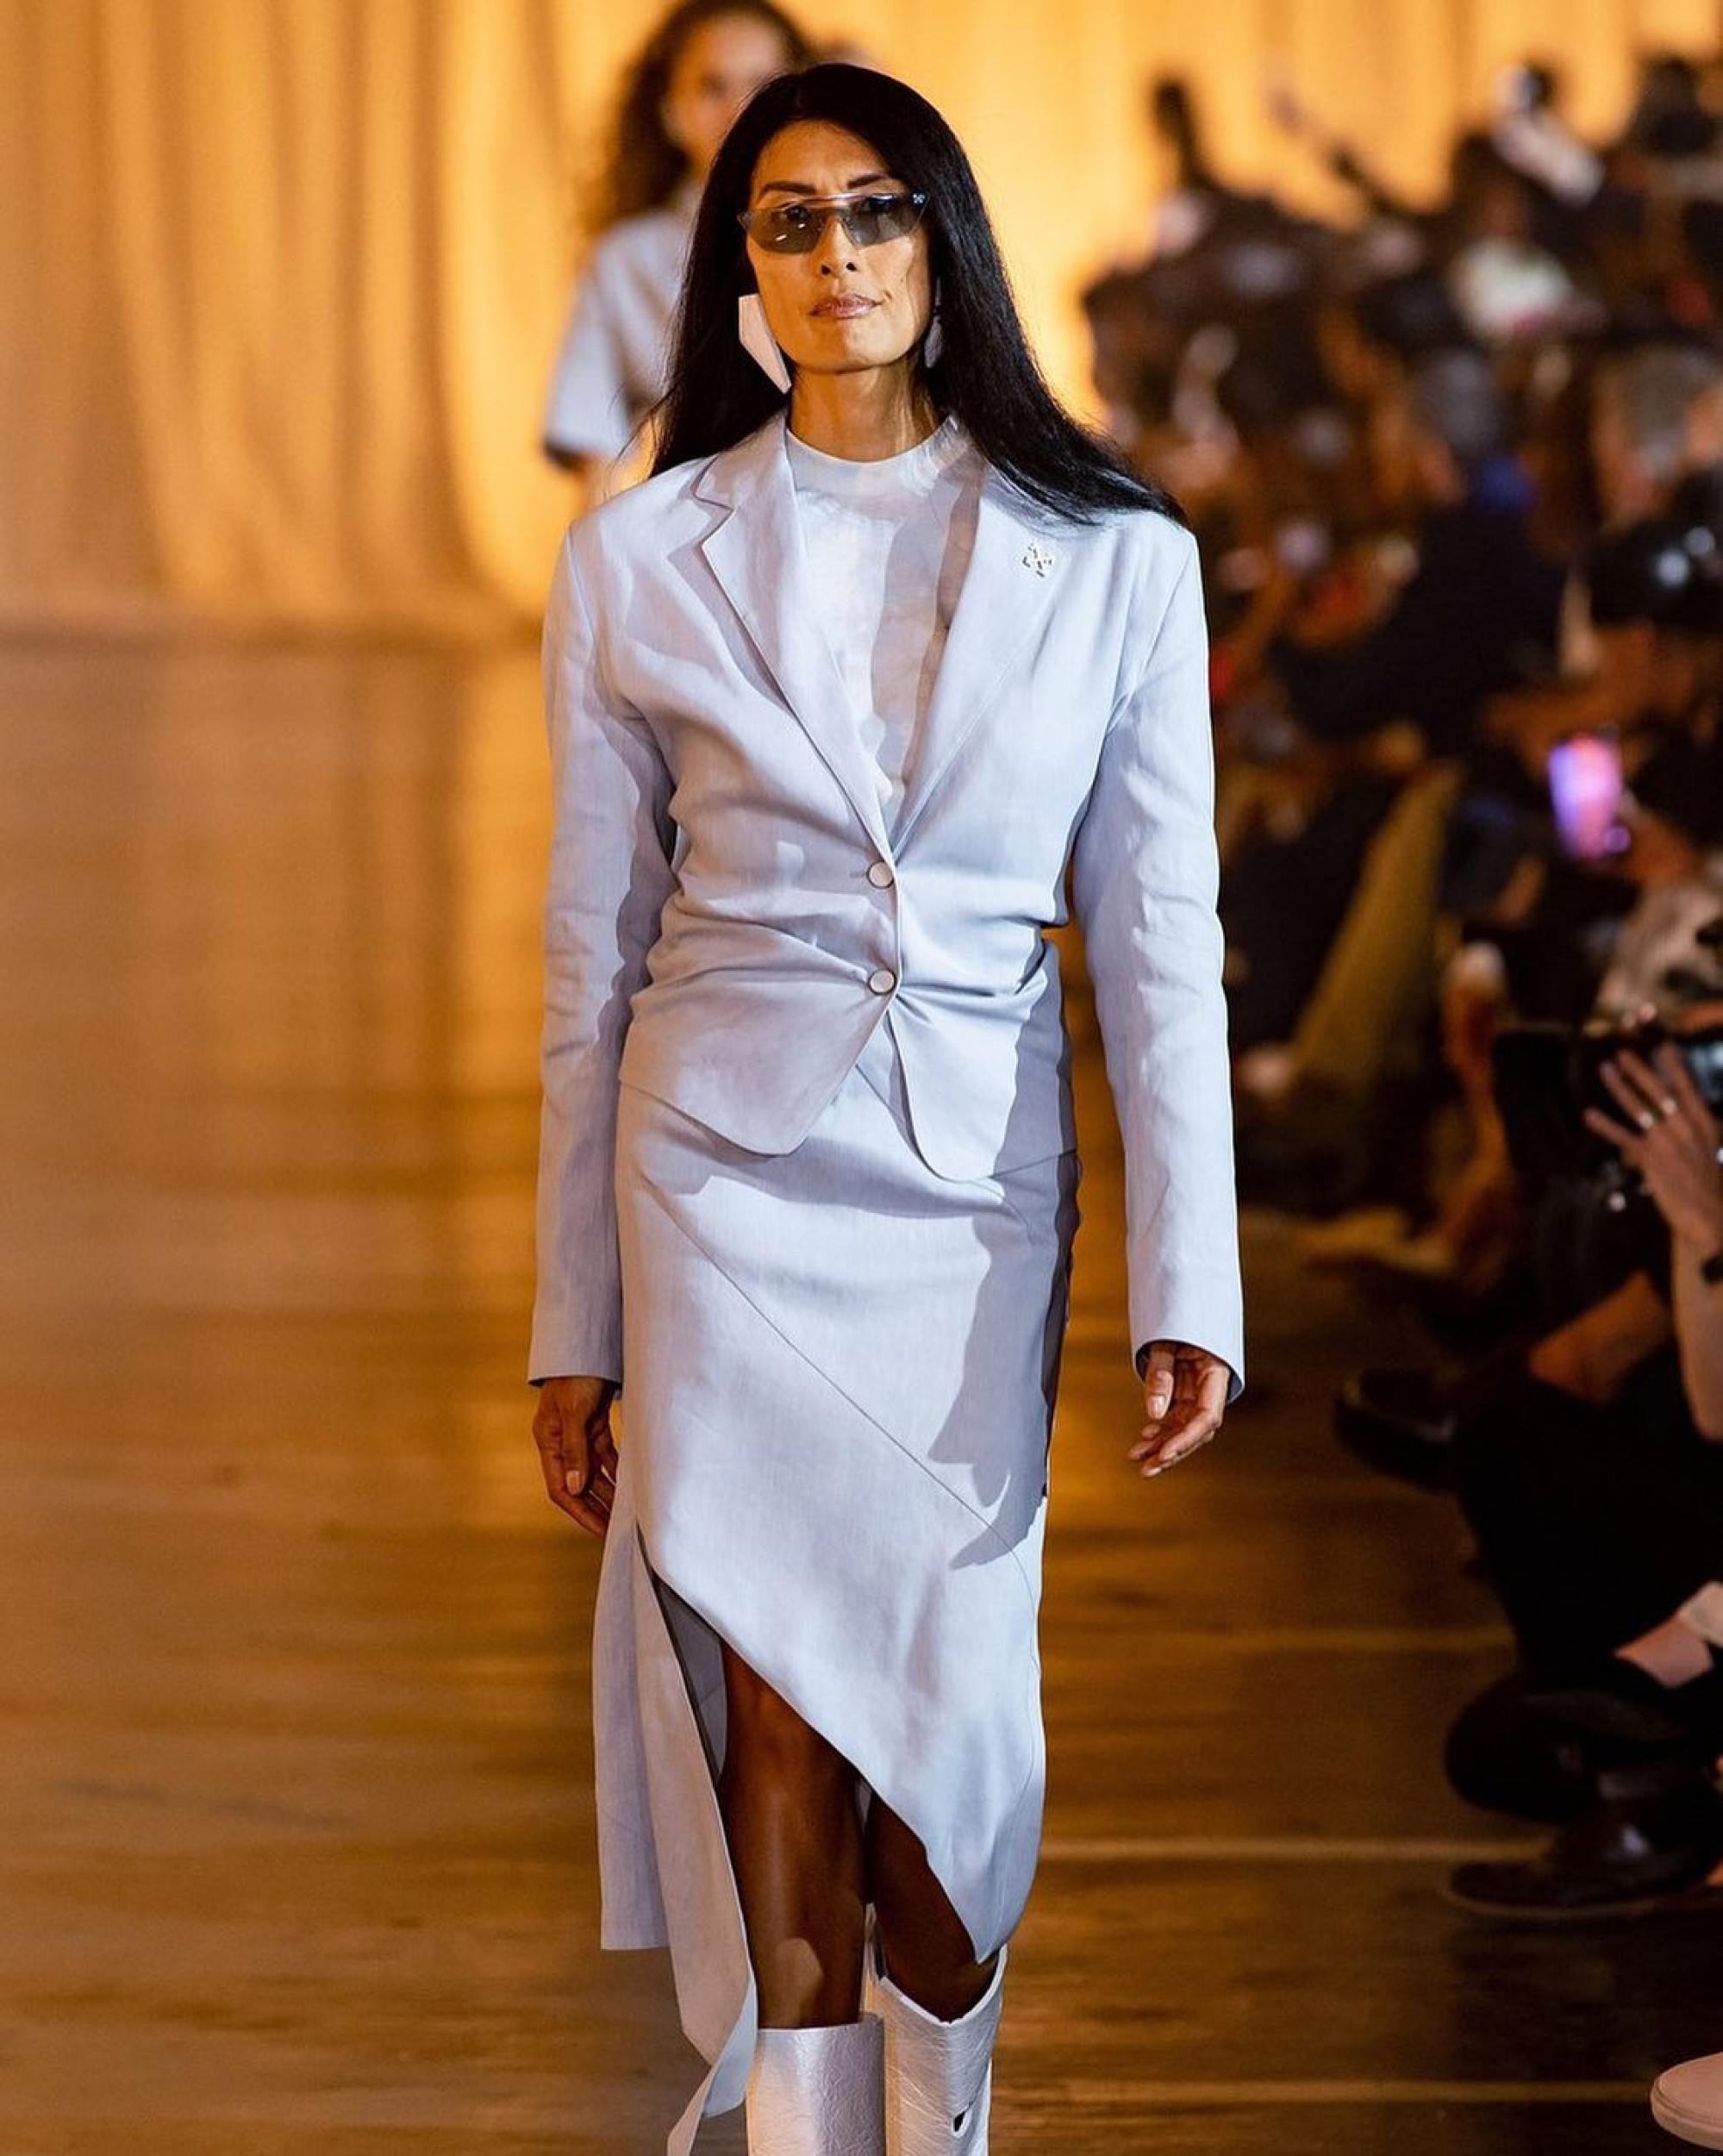 Suzi de Givenchy walking for Off-White’s spring/summer collection in 2020. Photo: @suzi.de.g/Instagram